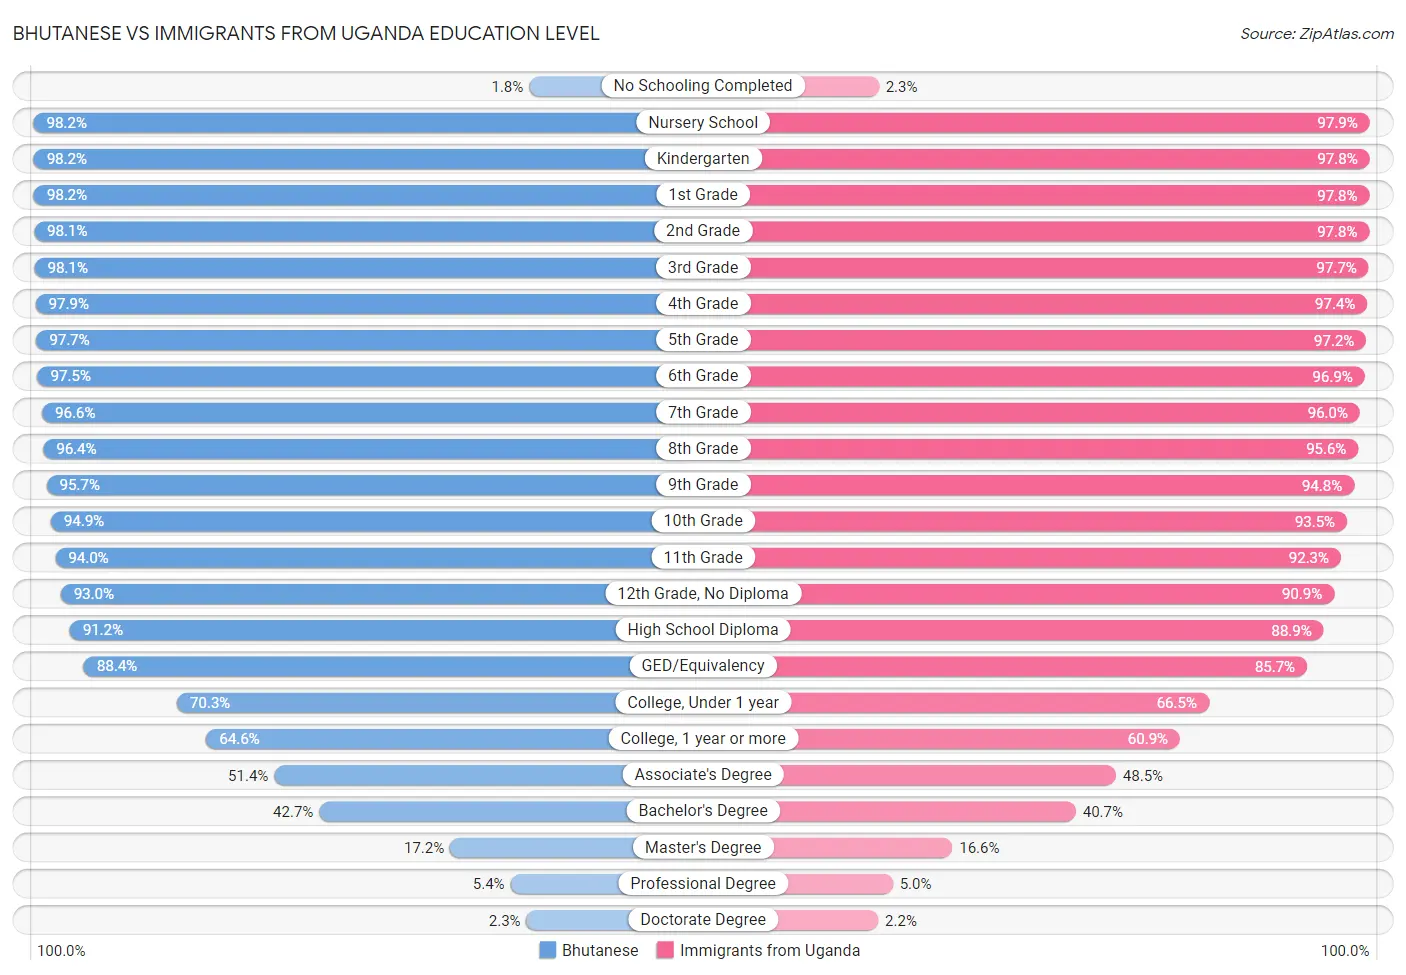 Bhutanese vs Immigrants from Uganda Education Level